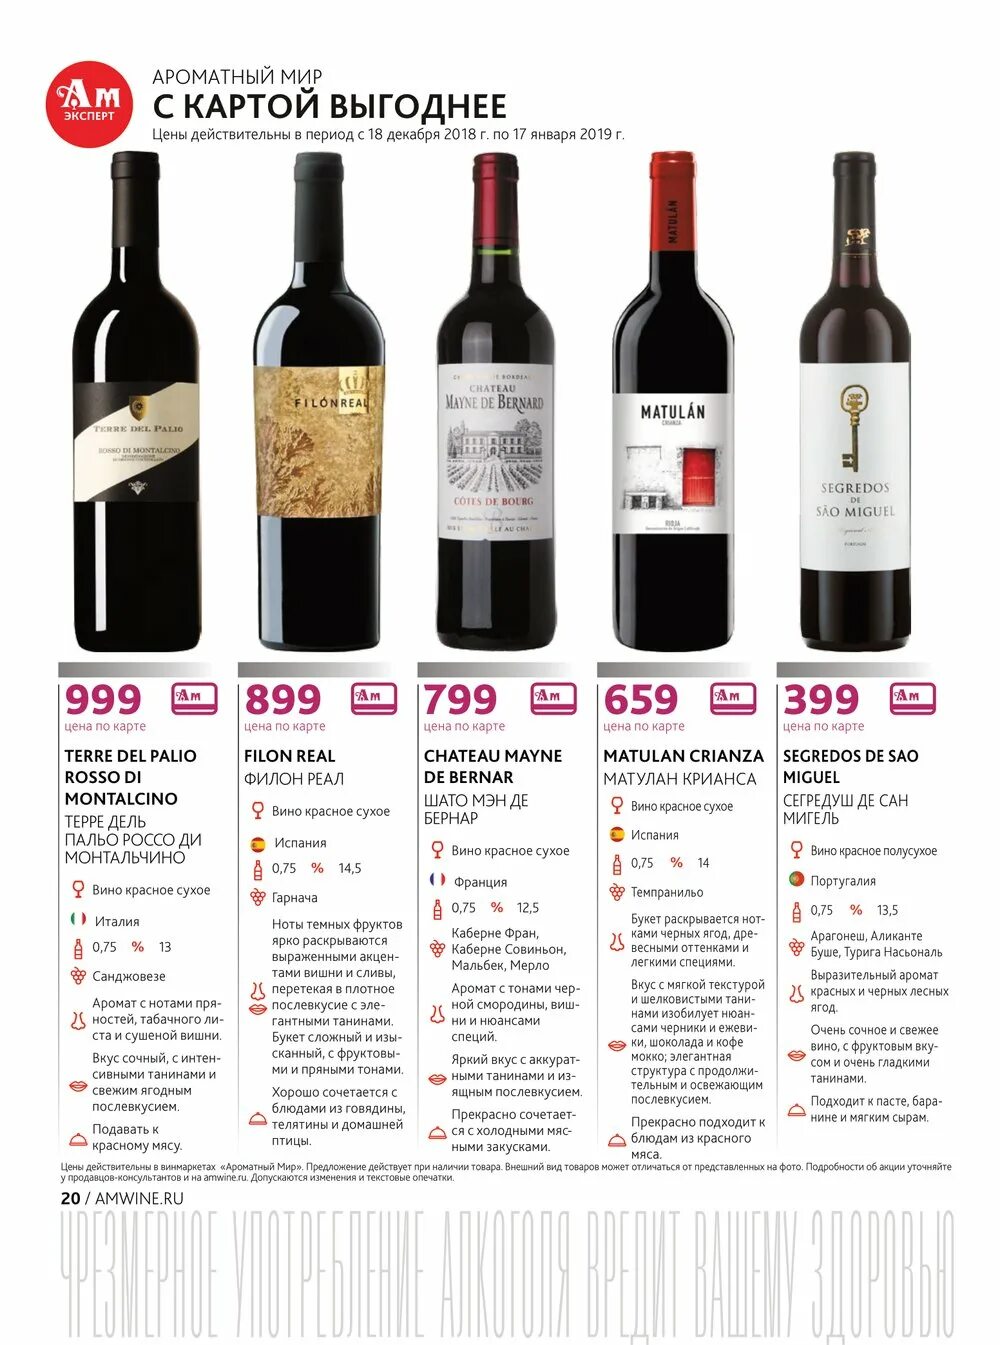 Вино красное сухое цена. Вино Shato ароматный мир. Вино красное сухое «Filon» 2019. Вино Италия ароматный мир полусухое 2016 красное 1682. Красное сухое вино Filon.